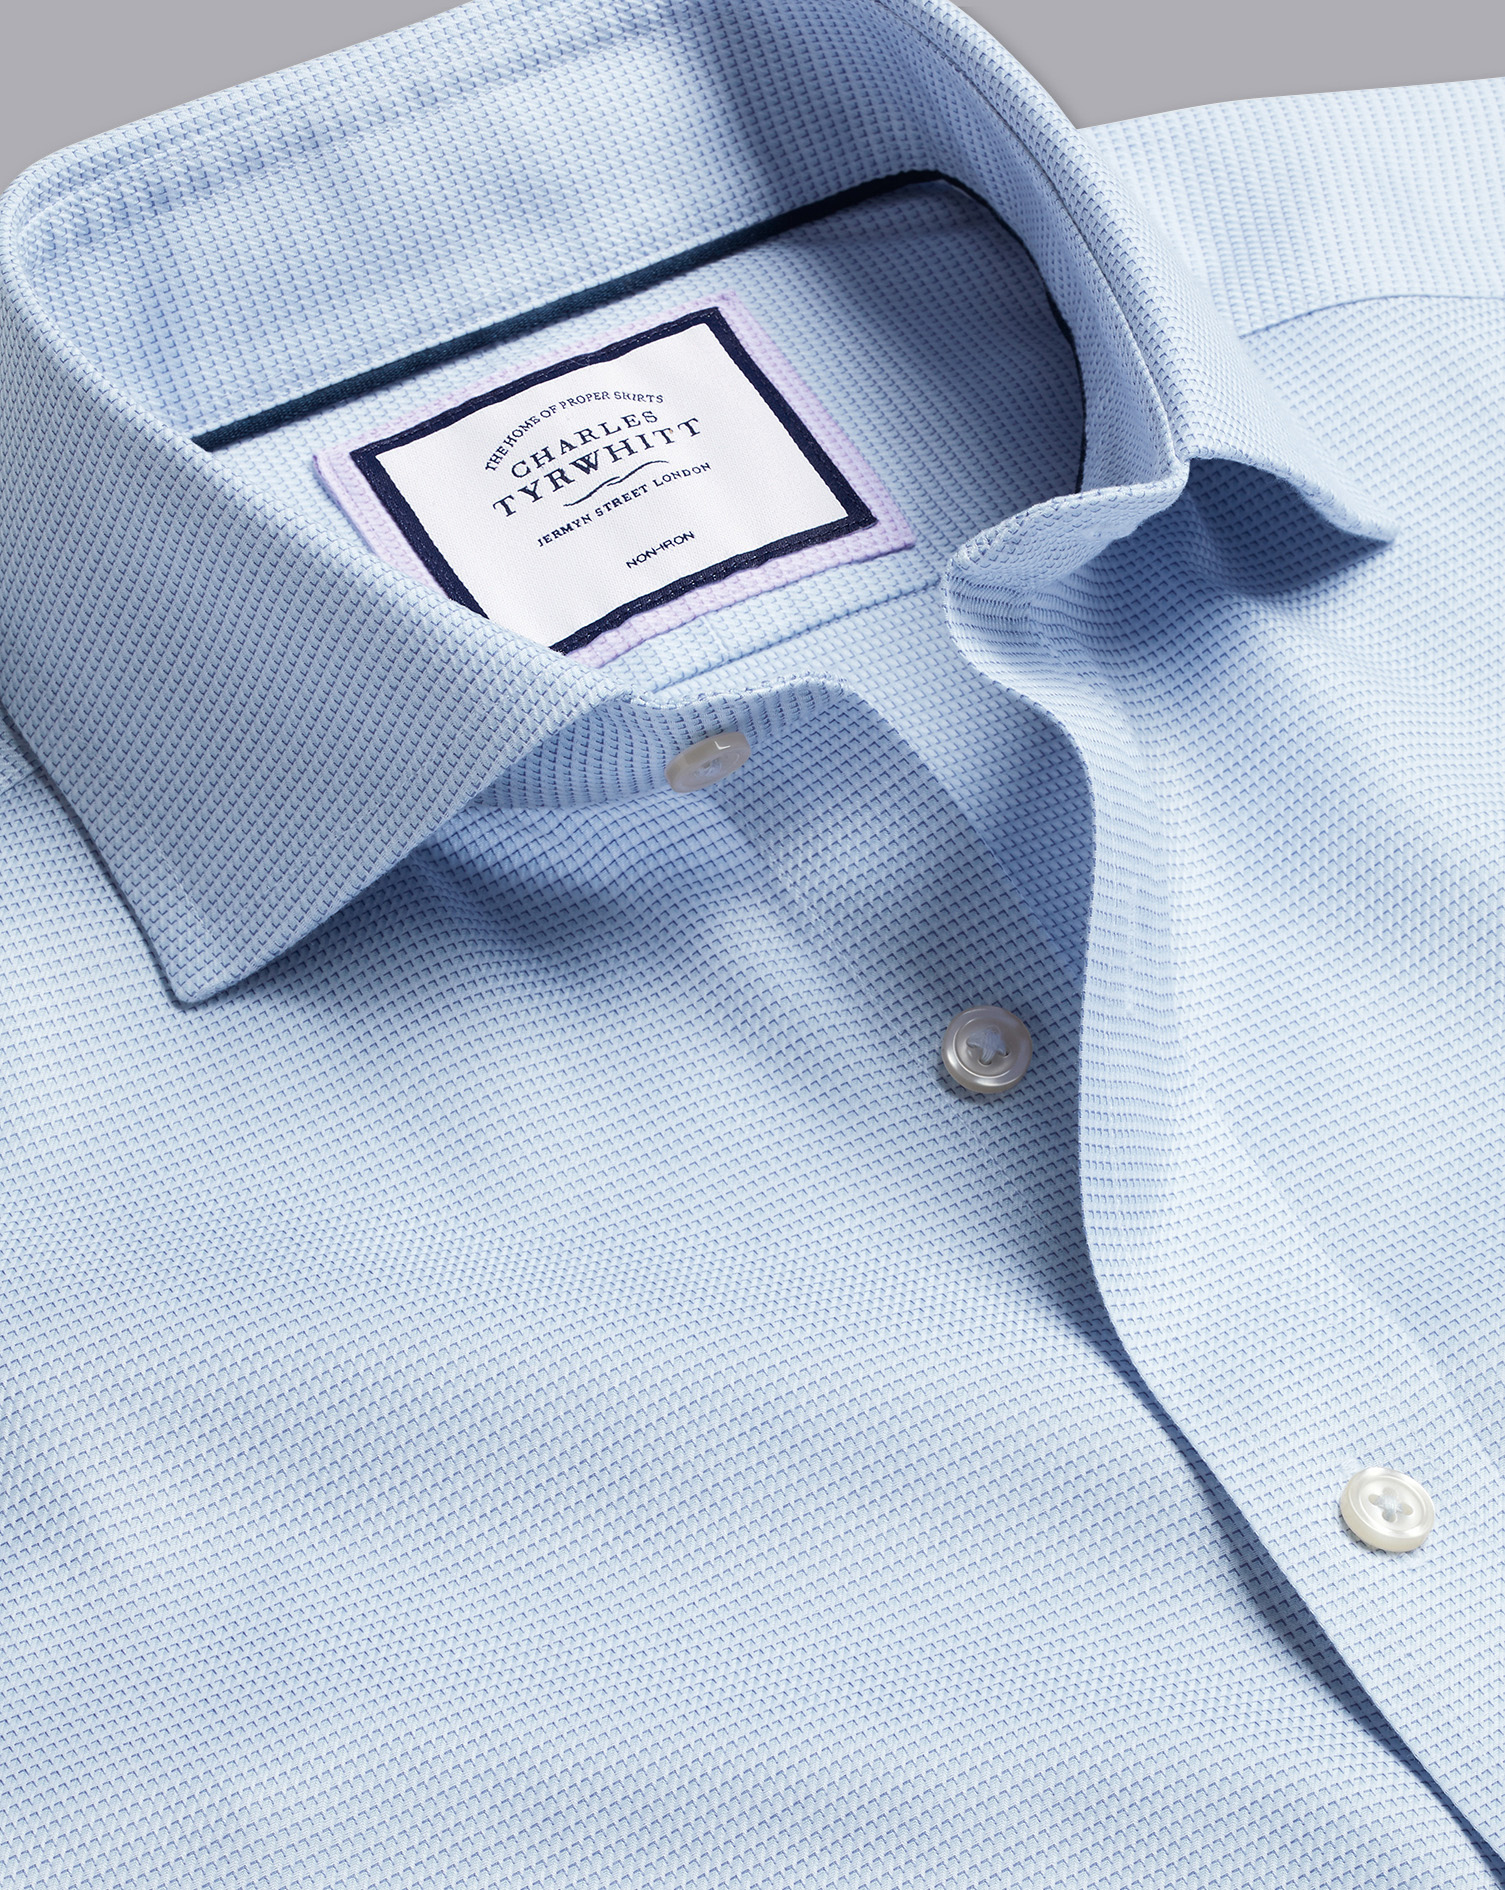 Cutaway Collar Non-Iron Cambridge Weave Cotton Dress Shirt - Light Blue French Cuff Size Medium
